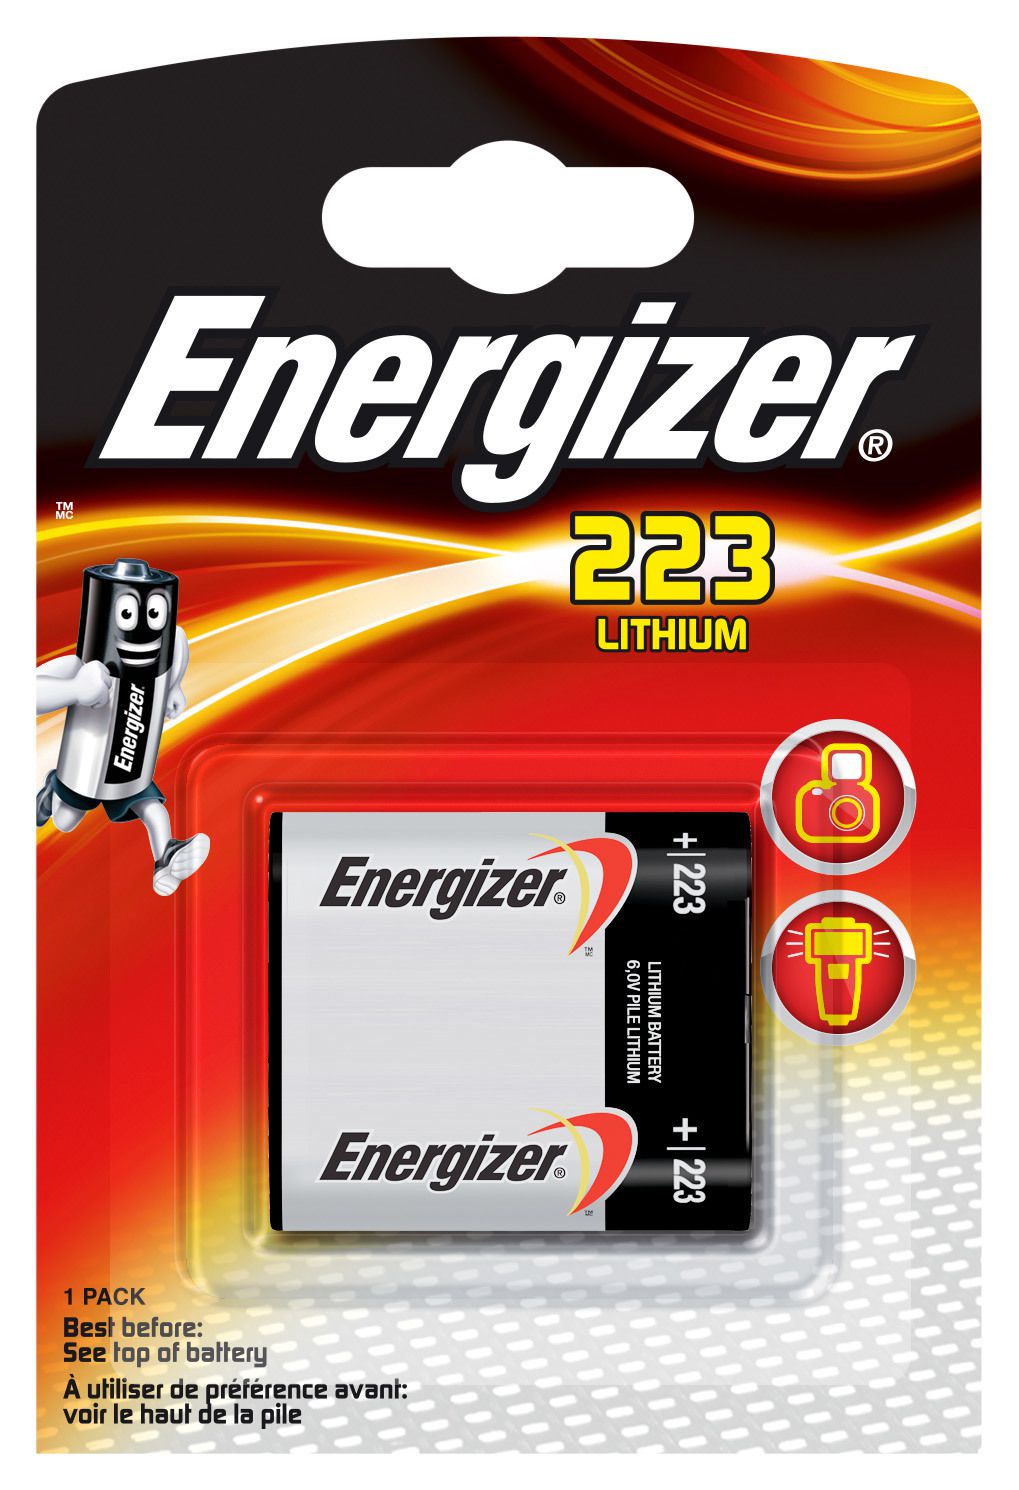 ENERGIZER 223 LITHIUM 6.0 V